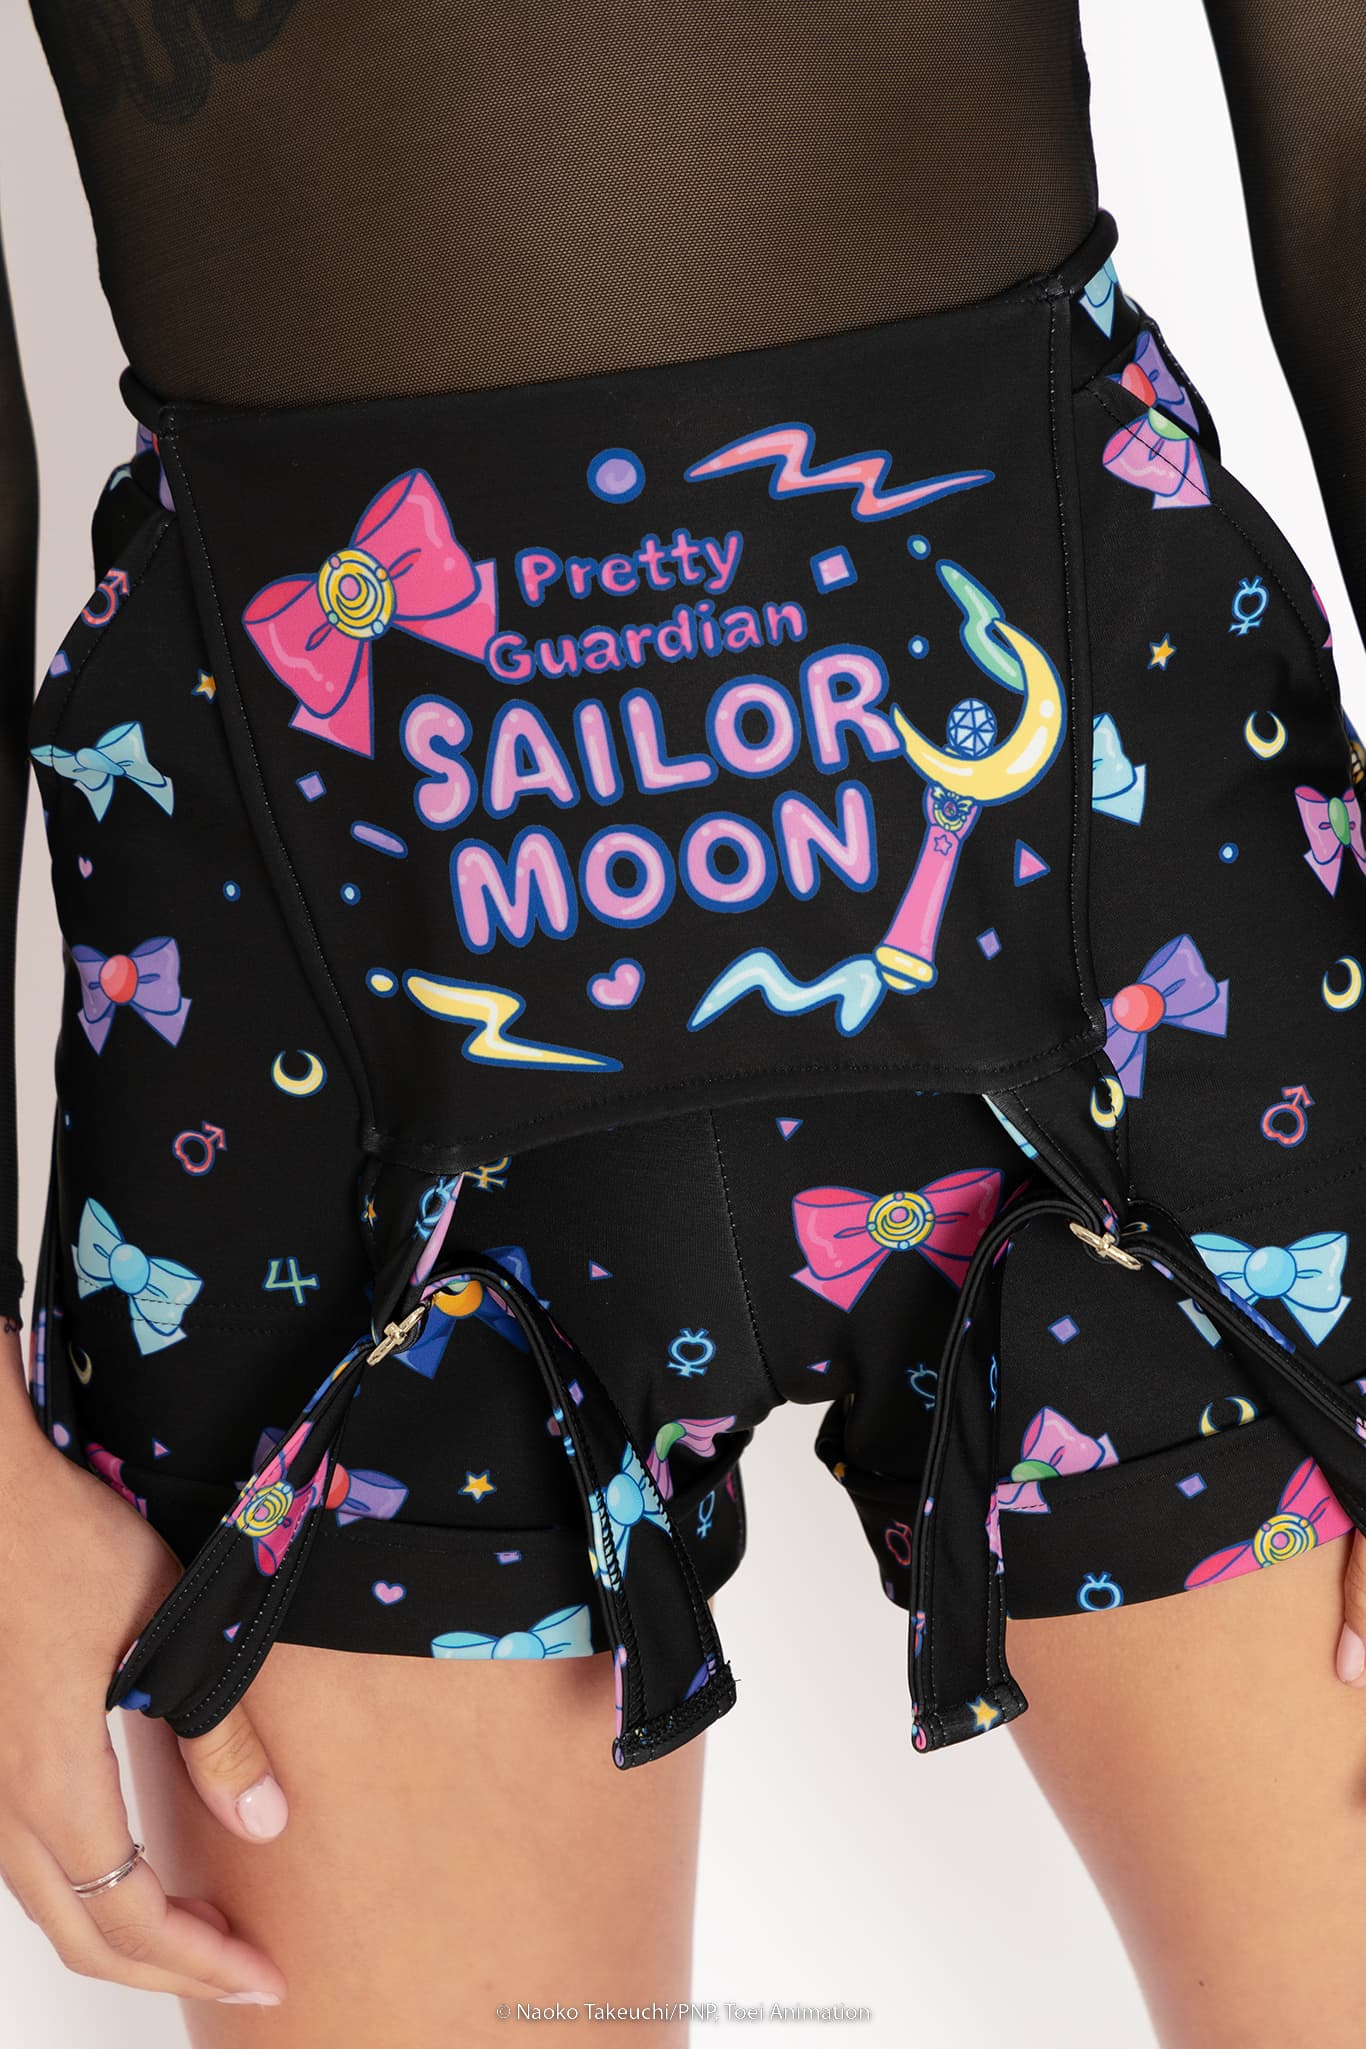 Sailor Moon x BlackMilk collaboration